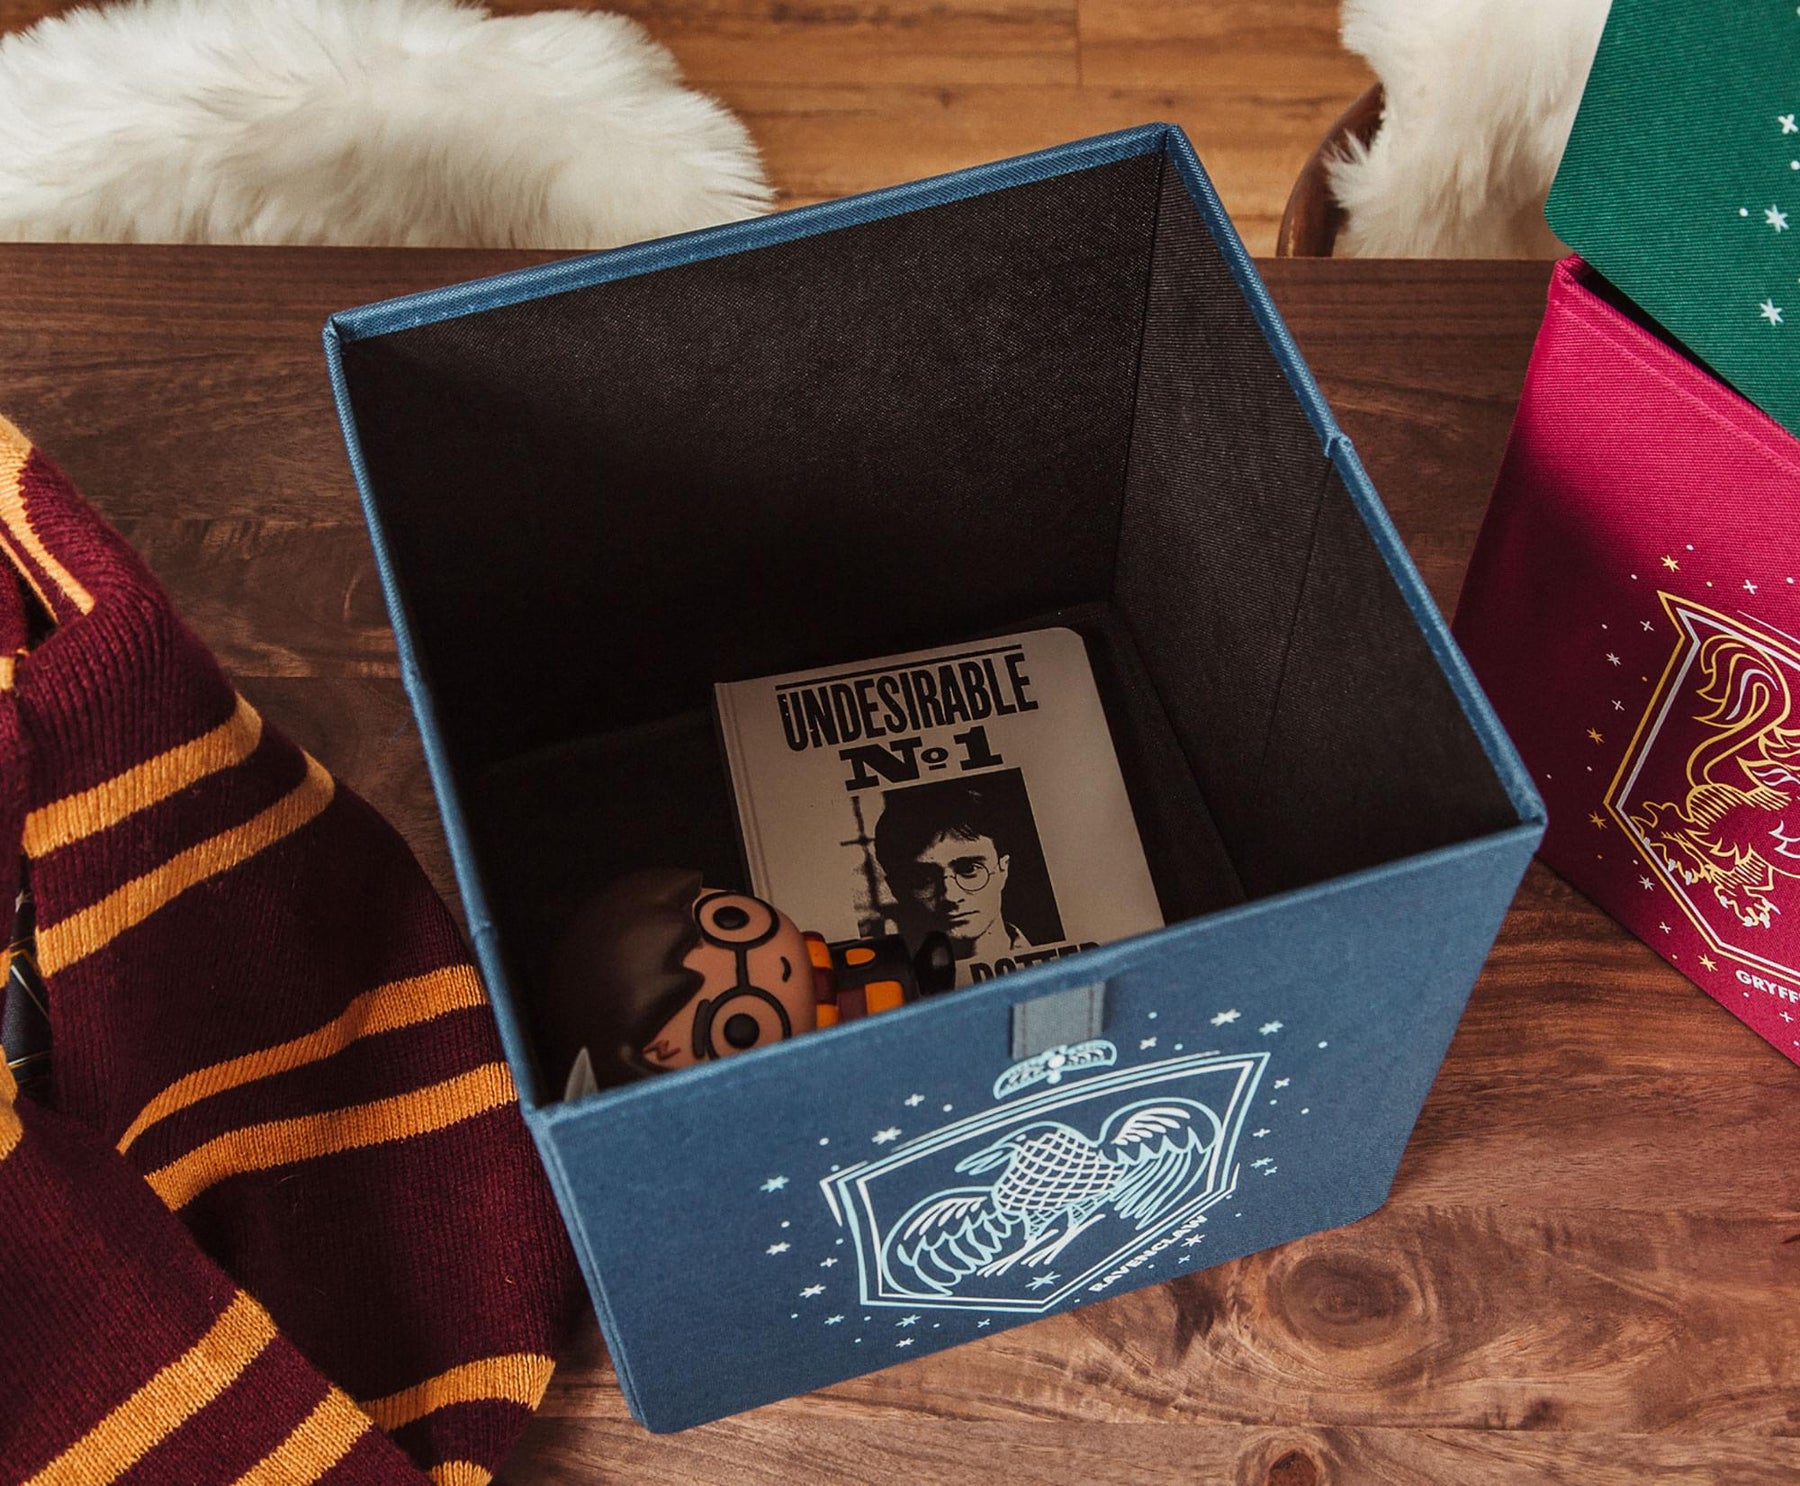 Harry Potter Hogwarts Houses 11-Inch Storage Bin Cube Organizers | Set of 4